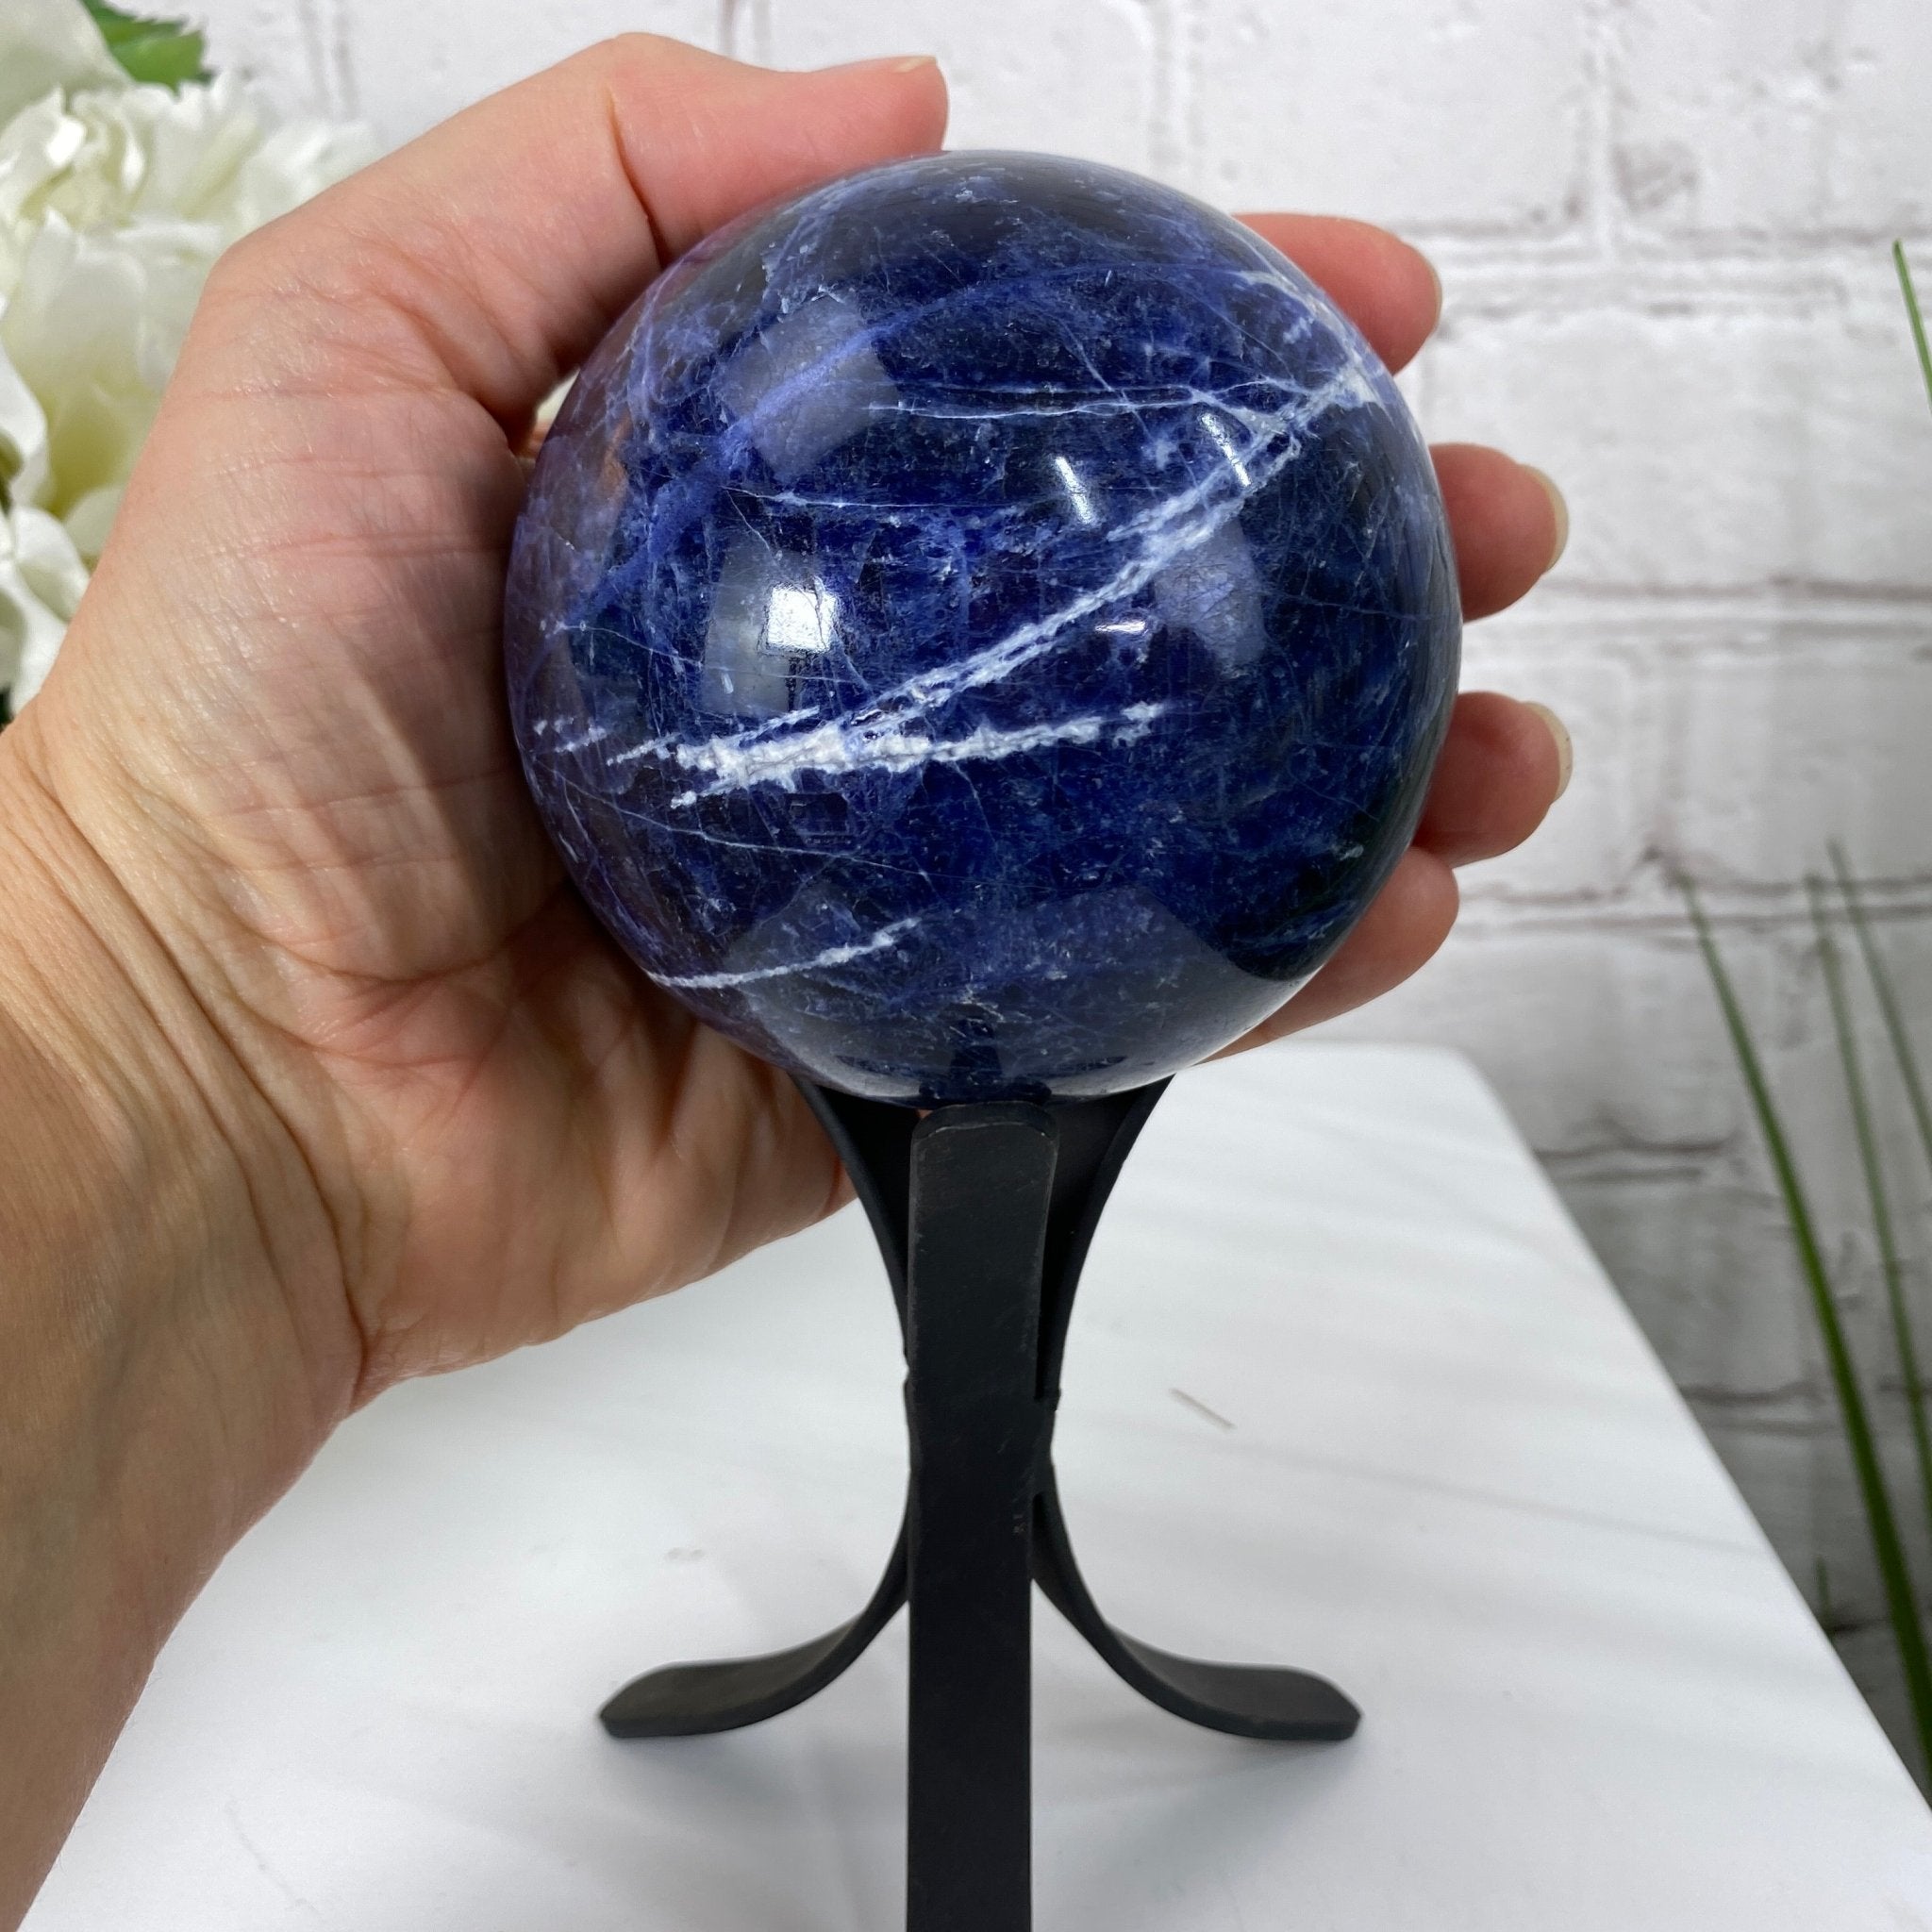 Quality Sodalite Sphere on a Black Metal Base, 3.2" diameter and 7" tall Model #5633-0005 by Brazil Gems - Brazil GemsBrazil GemsQuality Sodalite Sphere on a Black Metal Base, 3.2" diameter and 7" tall Model #5633-0005 by Brazil GemsSpheres5633-0005